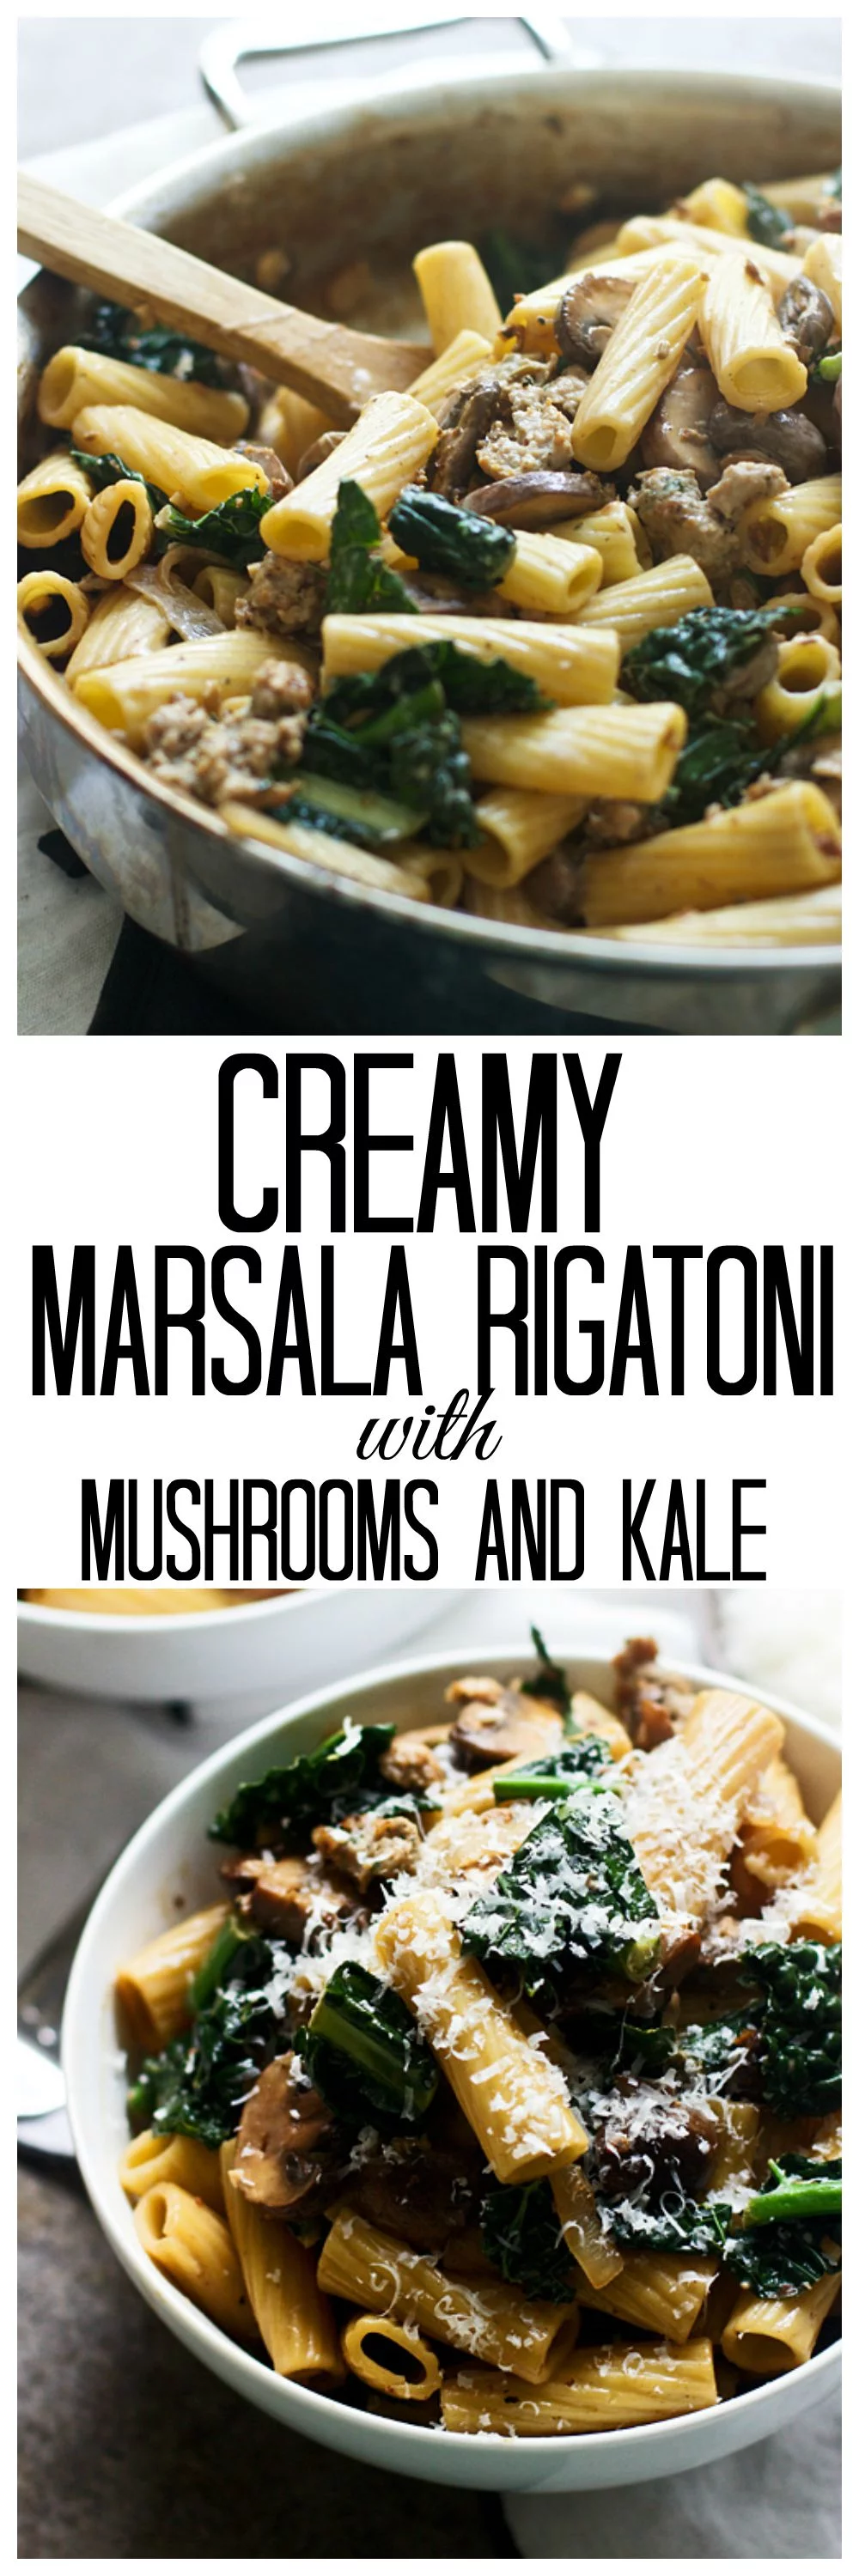 Creamy Marsala Rigatoni with Mushrooms and Kale